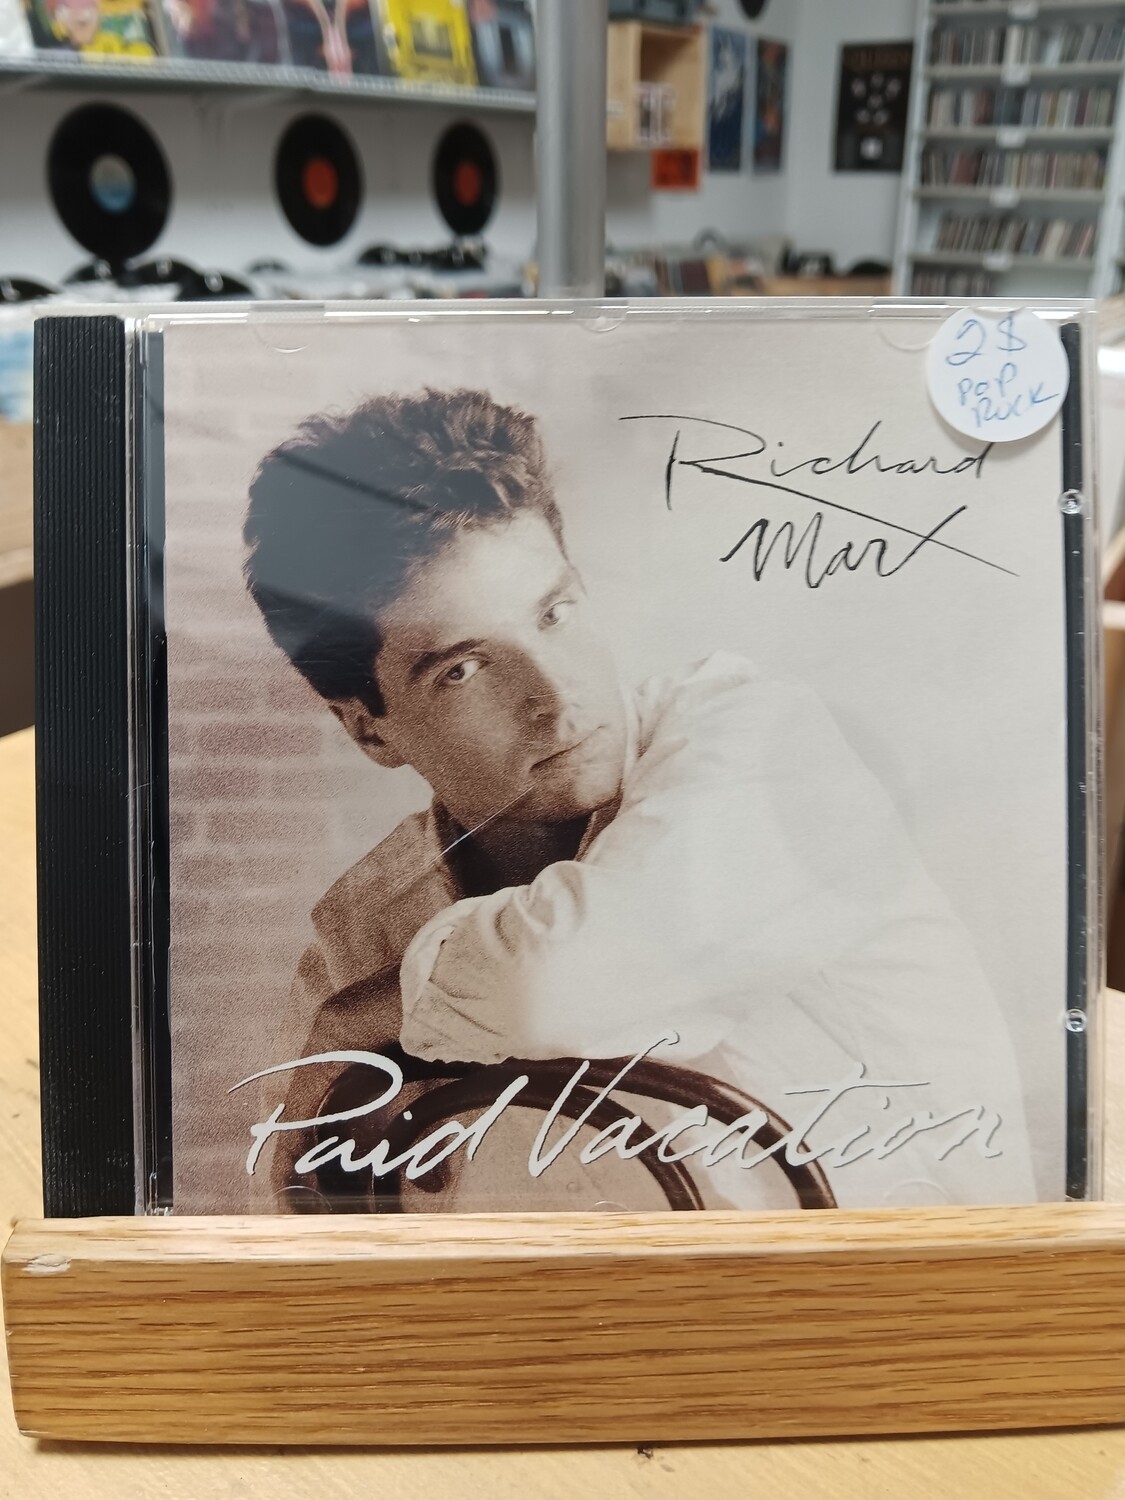 Richard Marx - Paid Vacation (CD)